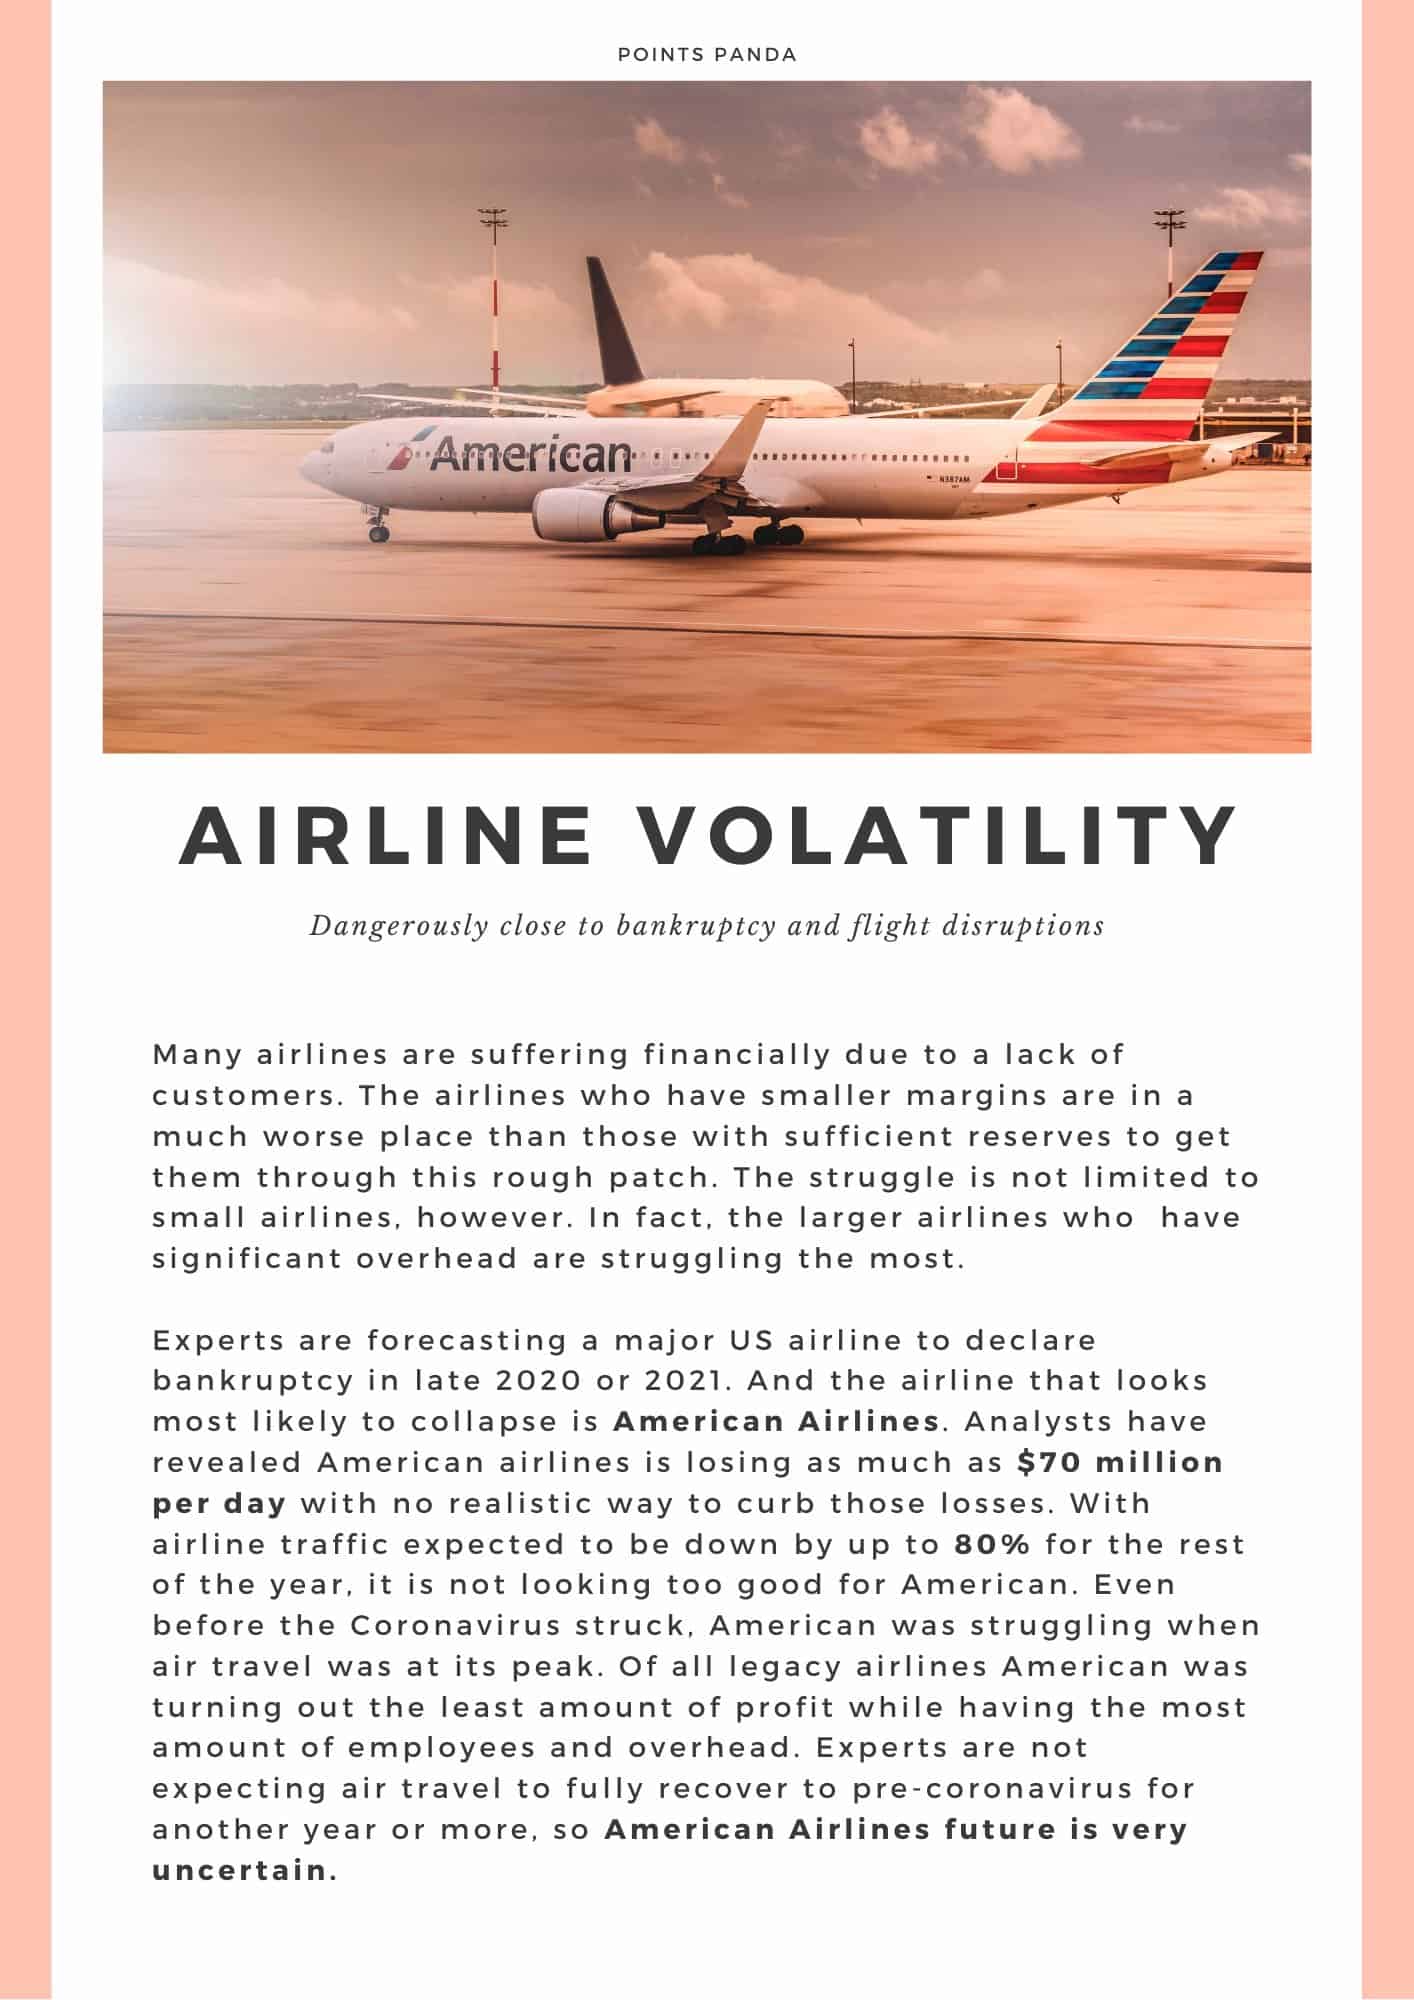 Airline volatility